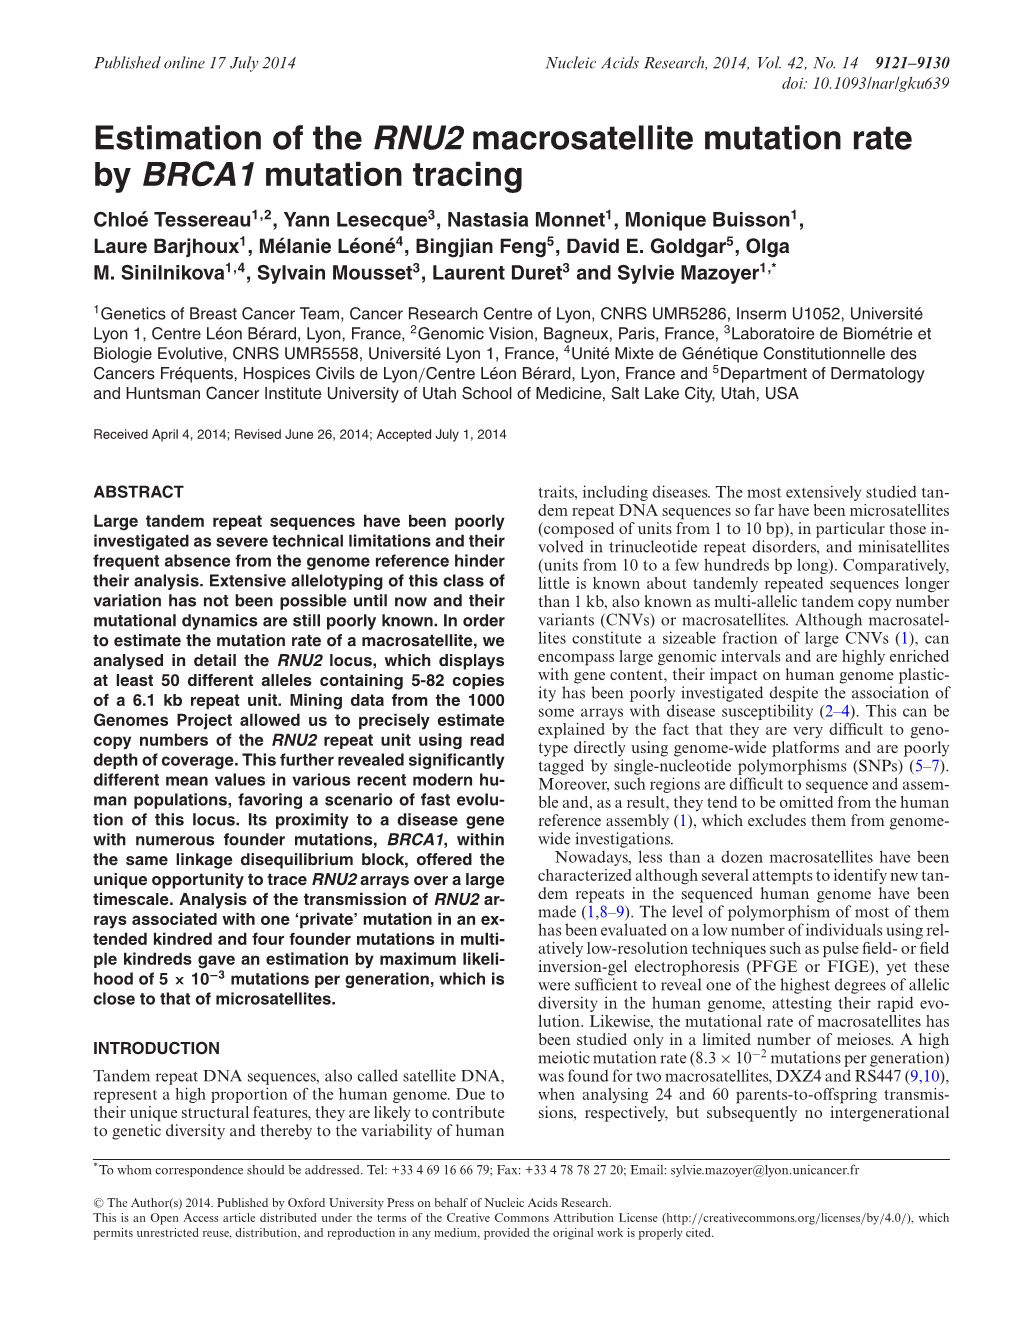 Estimation of the RNU2 Macrosatellite Mutation Rate by BRCA1 Mutation